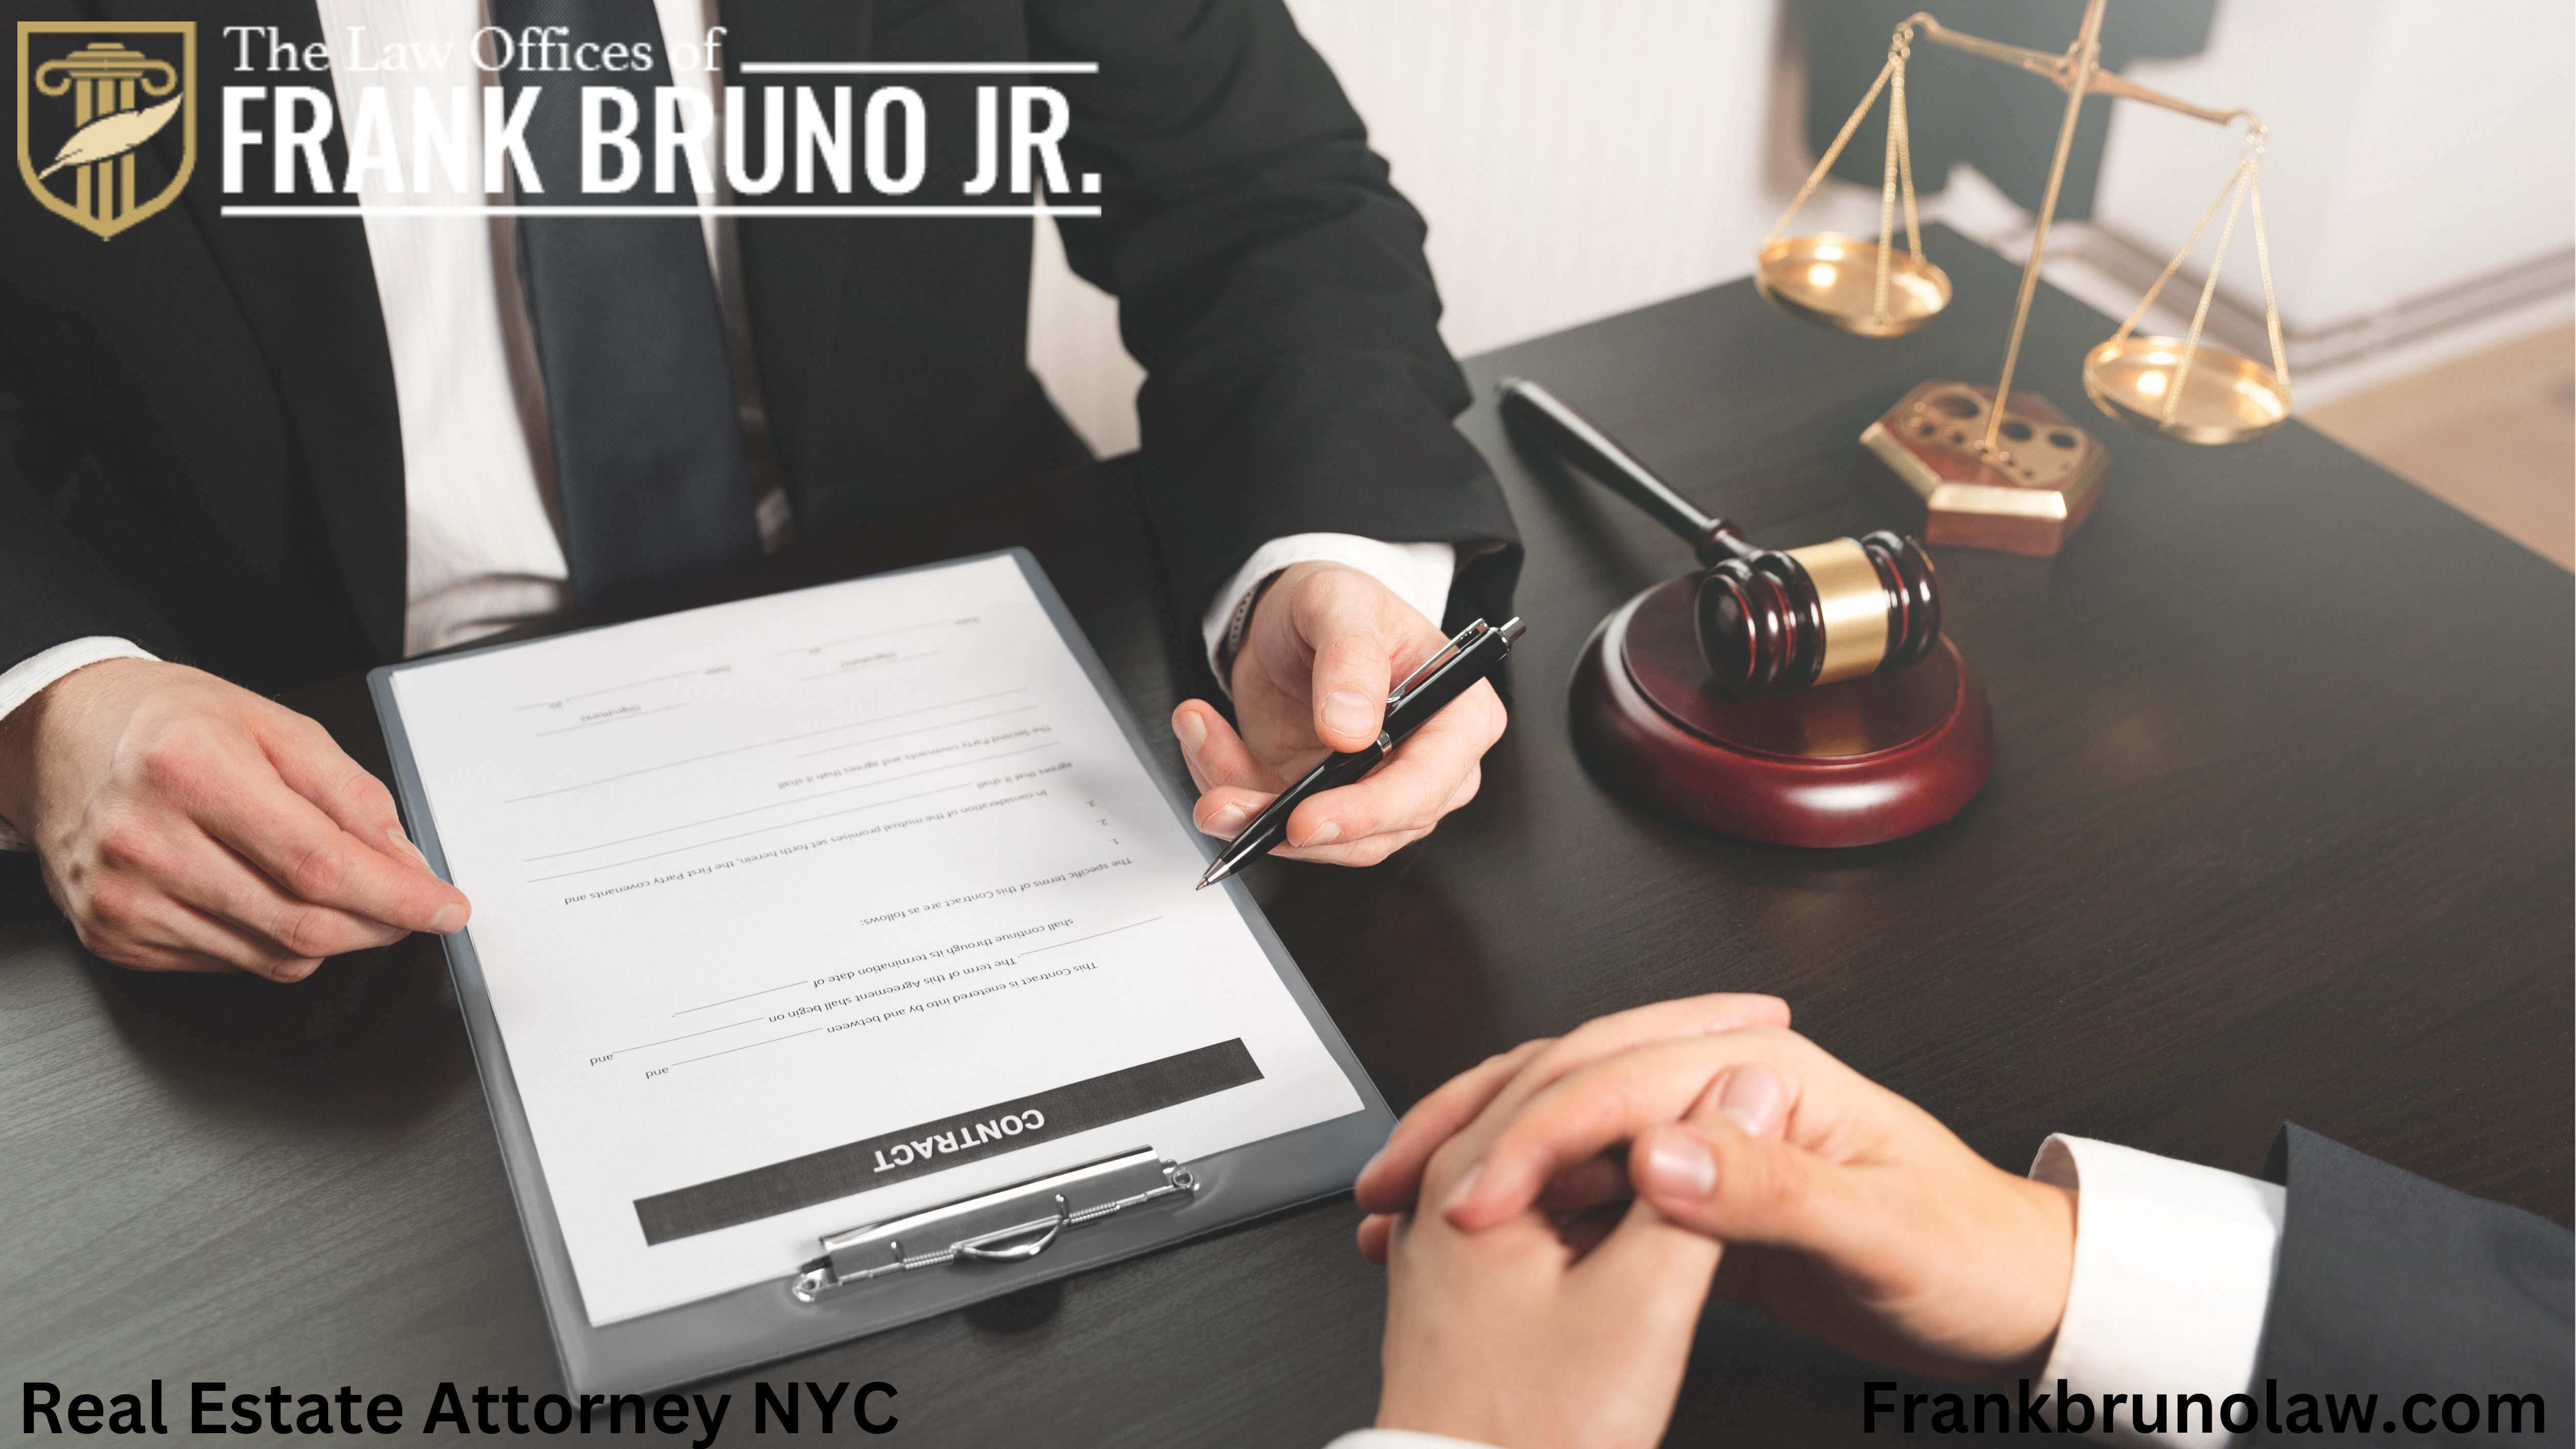 Real Estate Attorney NYC - New York - New York ID1538740 2